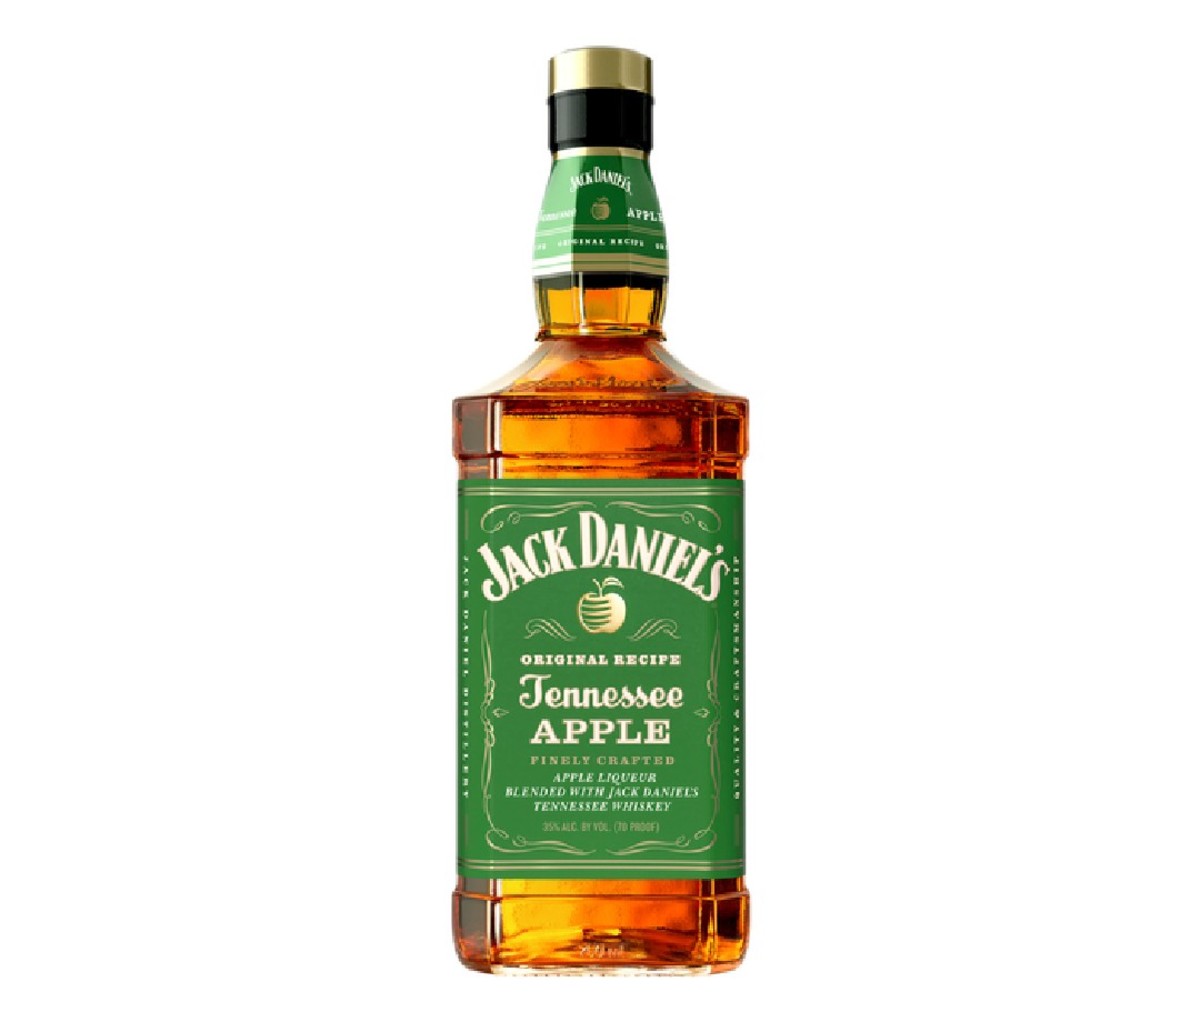 A bottle of Jack Daniel’s Tennessee Apple whiskey.